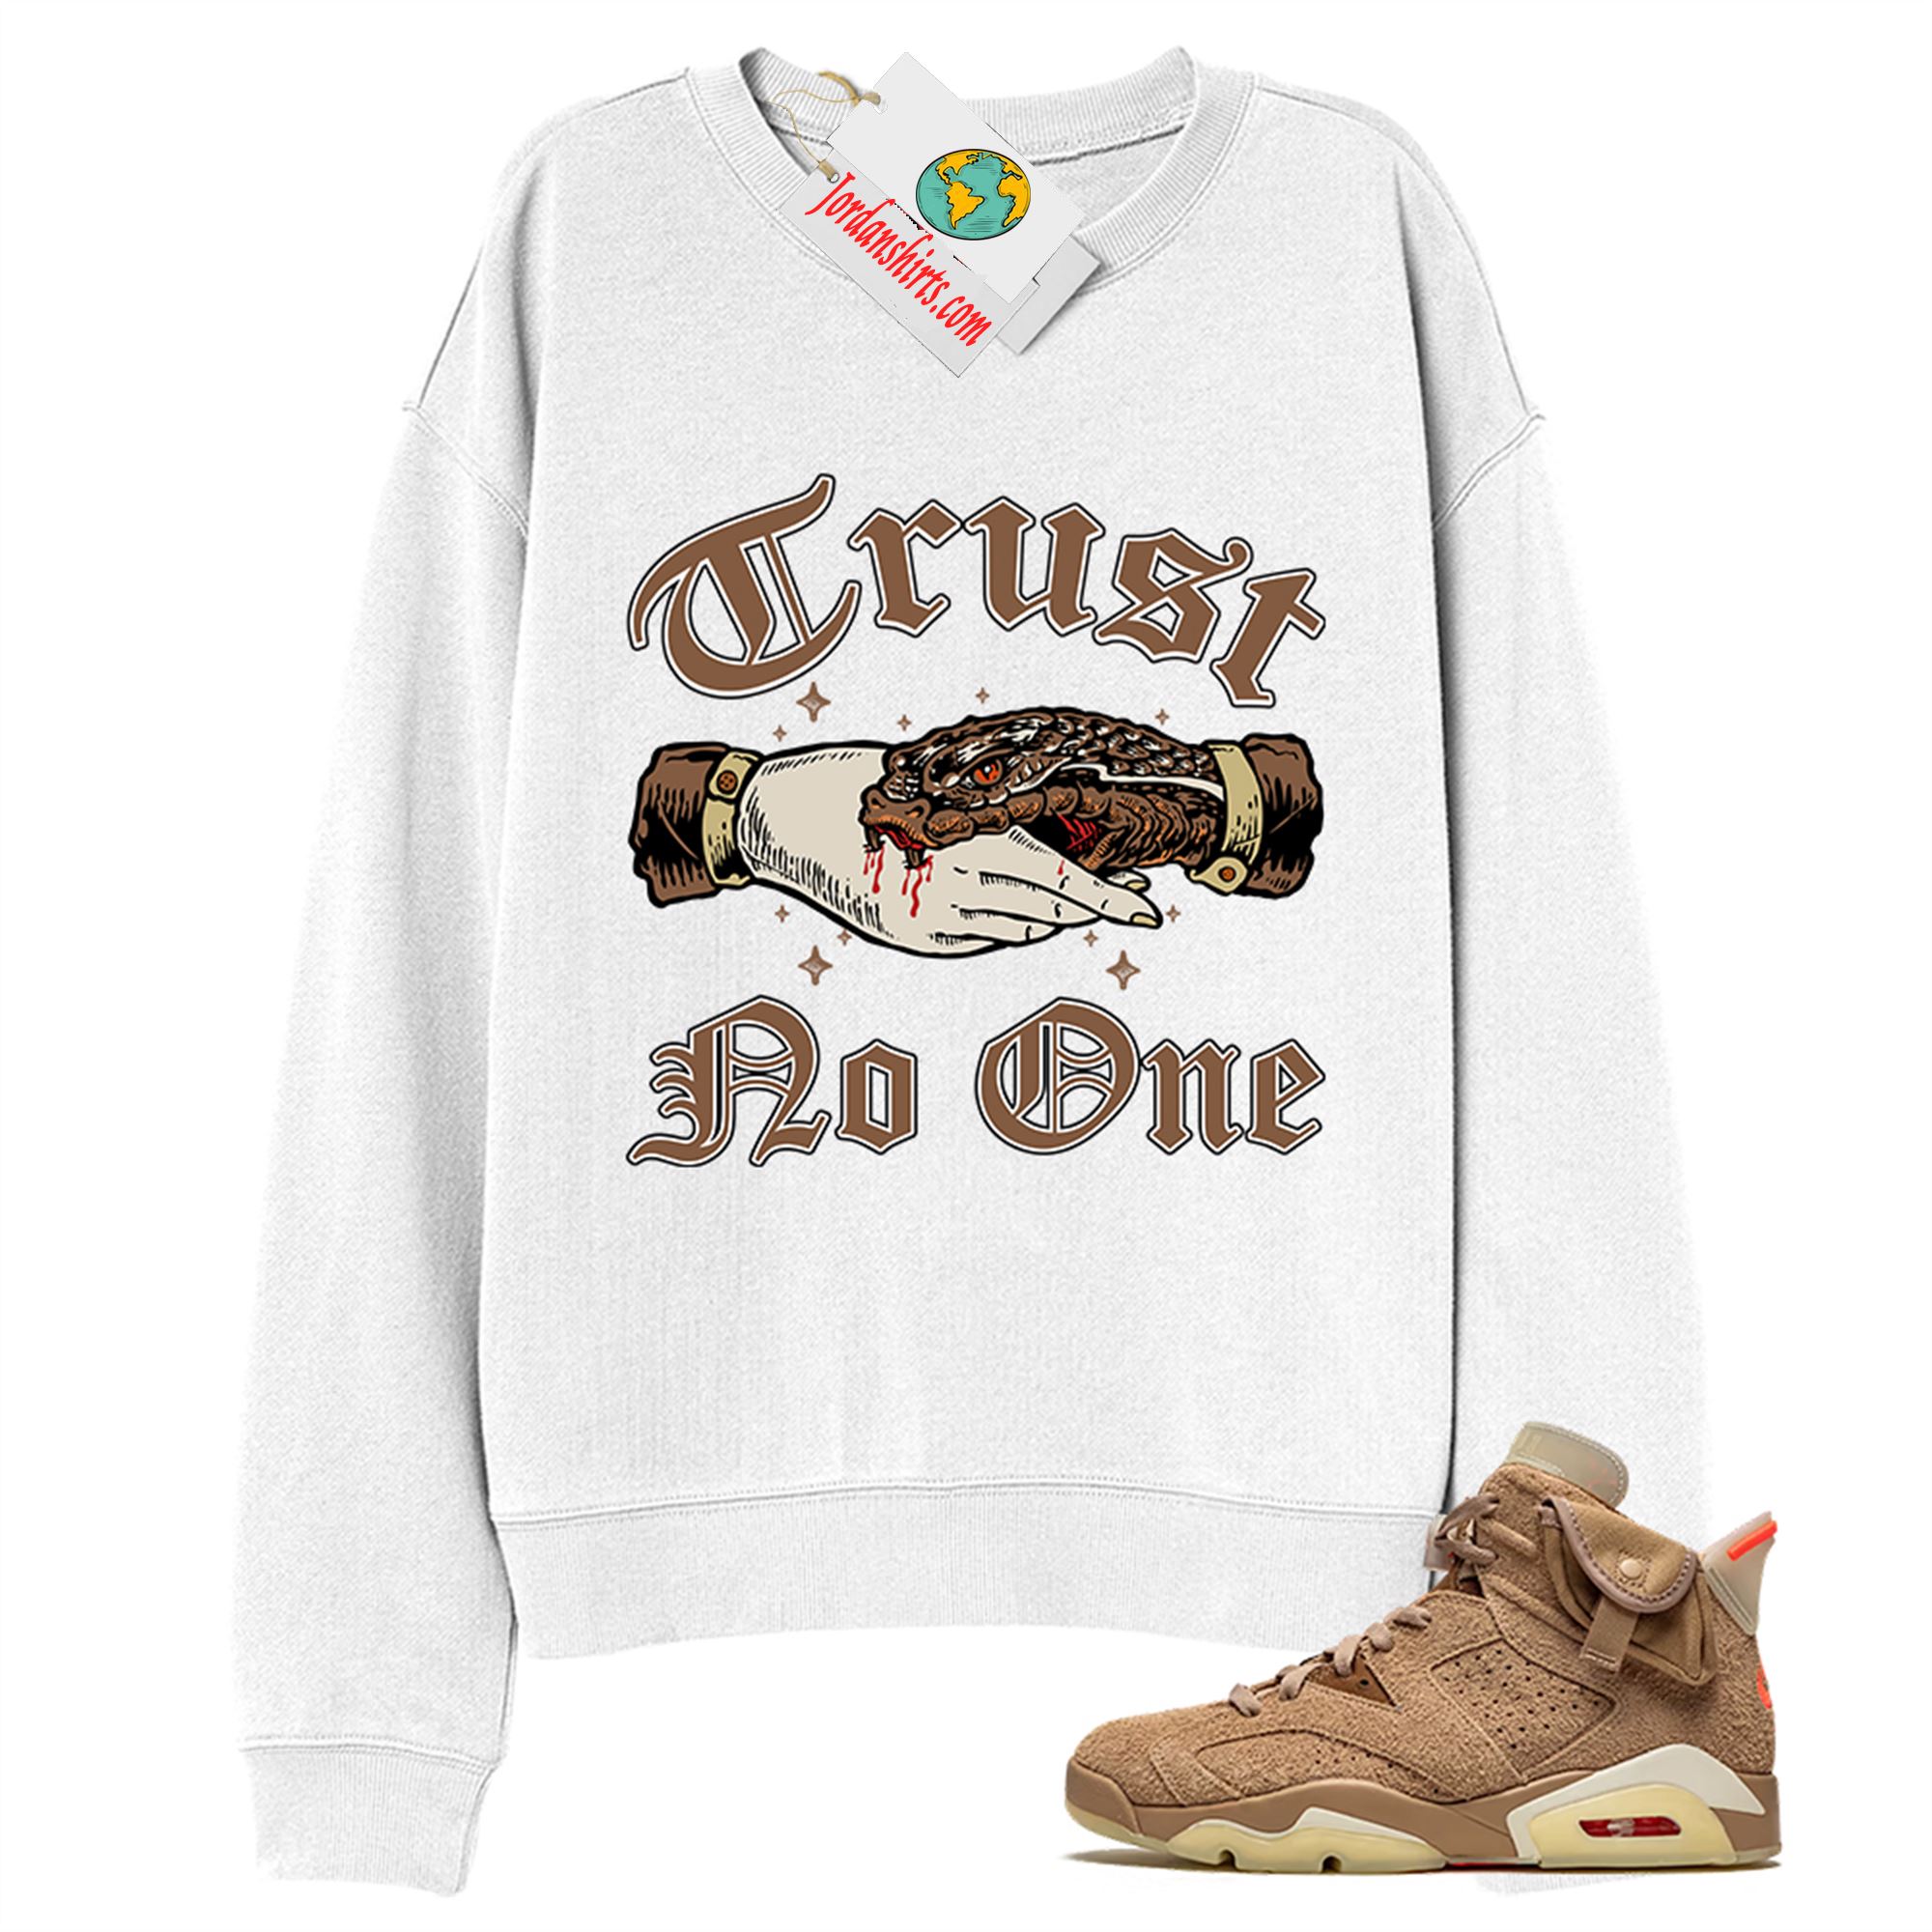 Jordan 6 Sweatshirt, Trust No One Deal With Snake White Sweatshirt Air Jordan 6 Travis Scott 6s Plus Size Up To 5xl